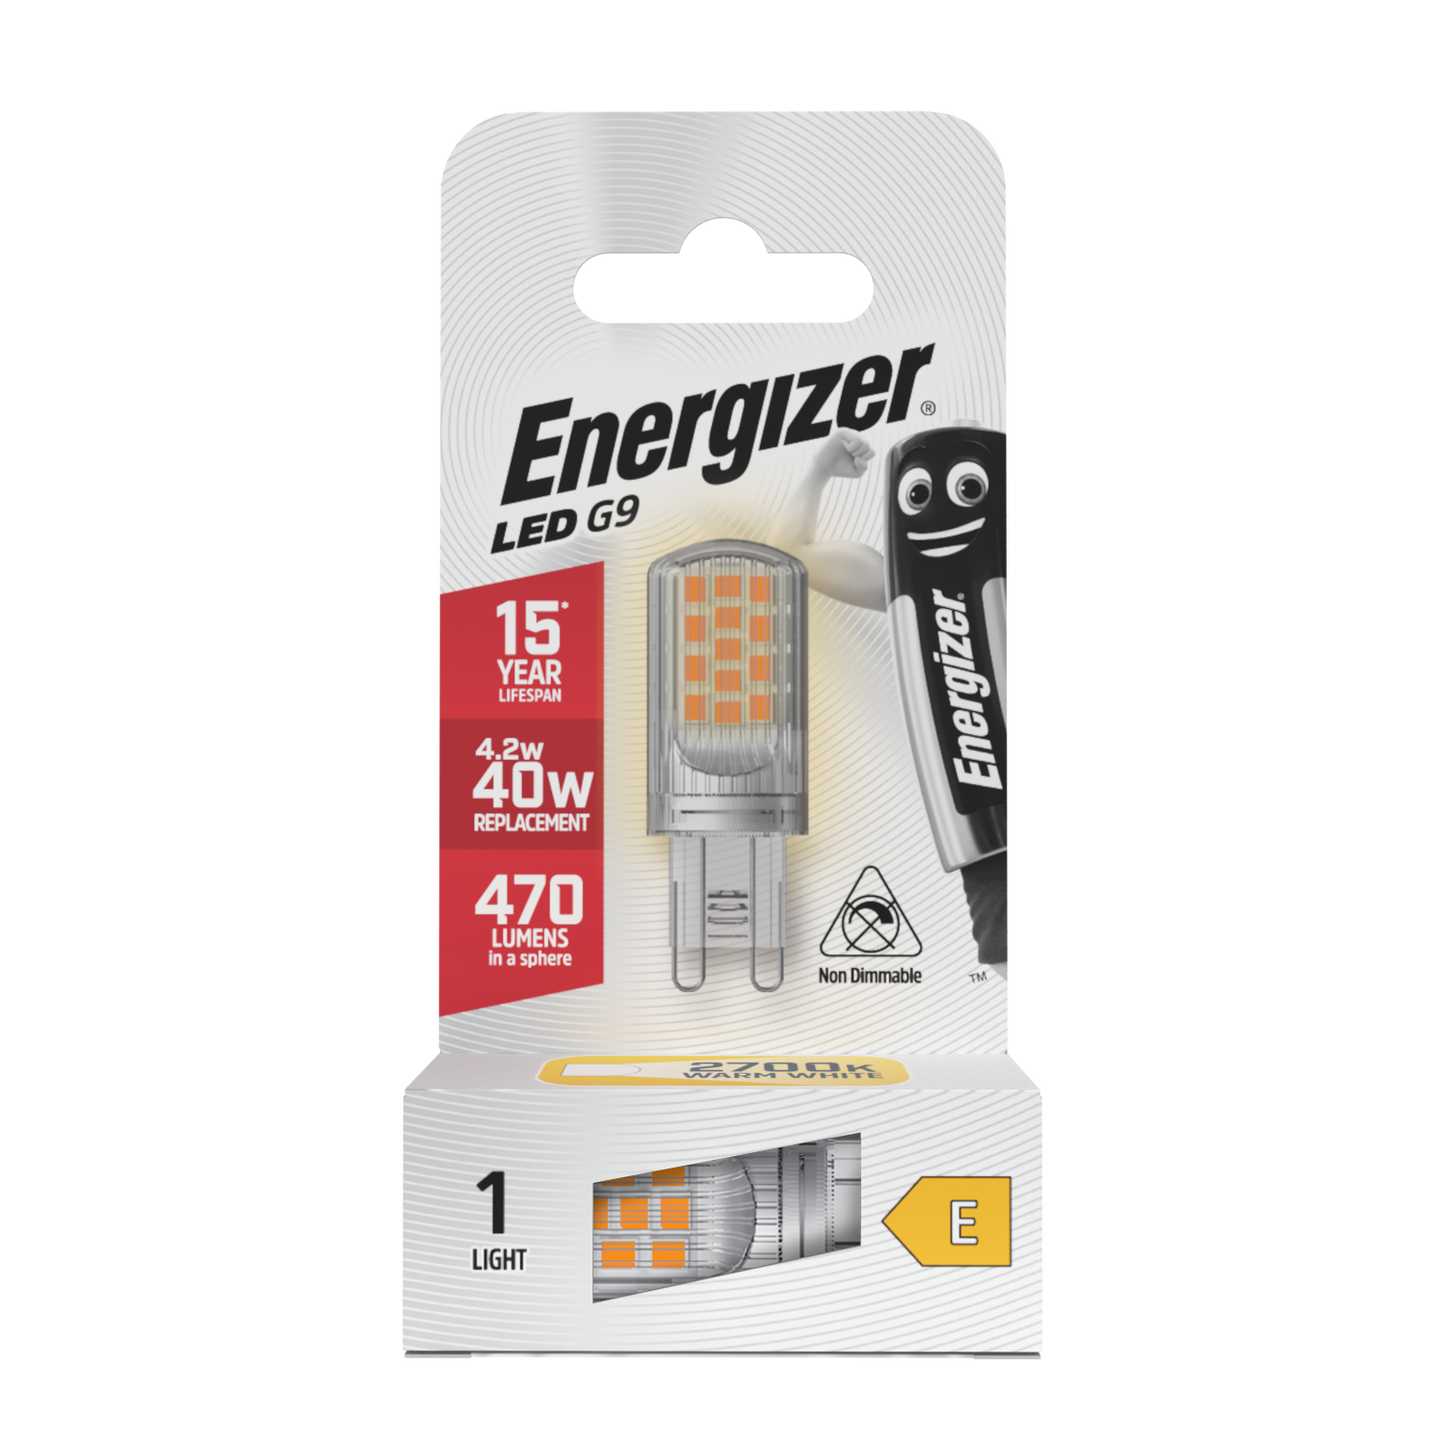 Energizer LED G9 470 lúmenes 4,2W 2700K (blanco cálido), caja de 1